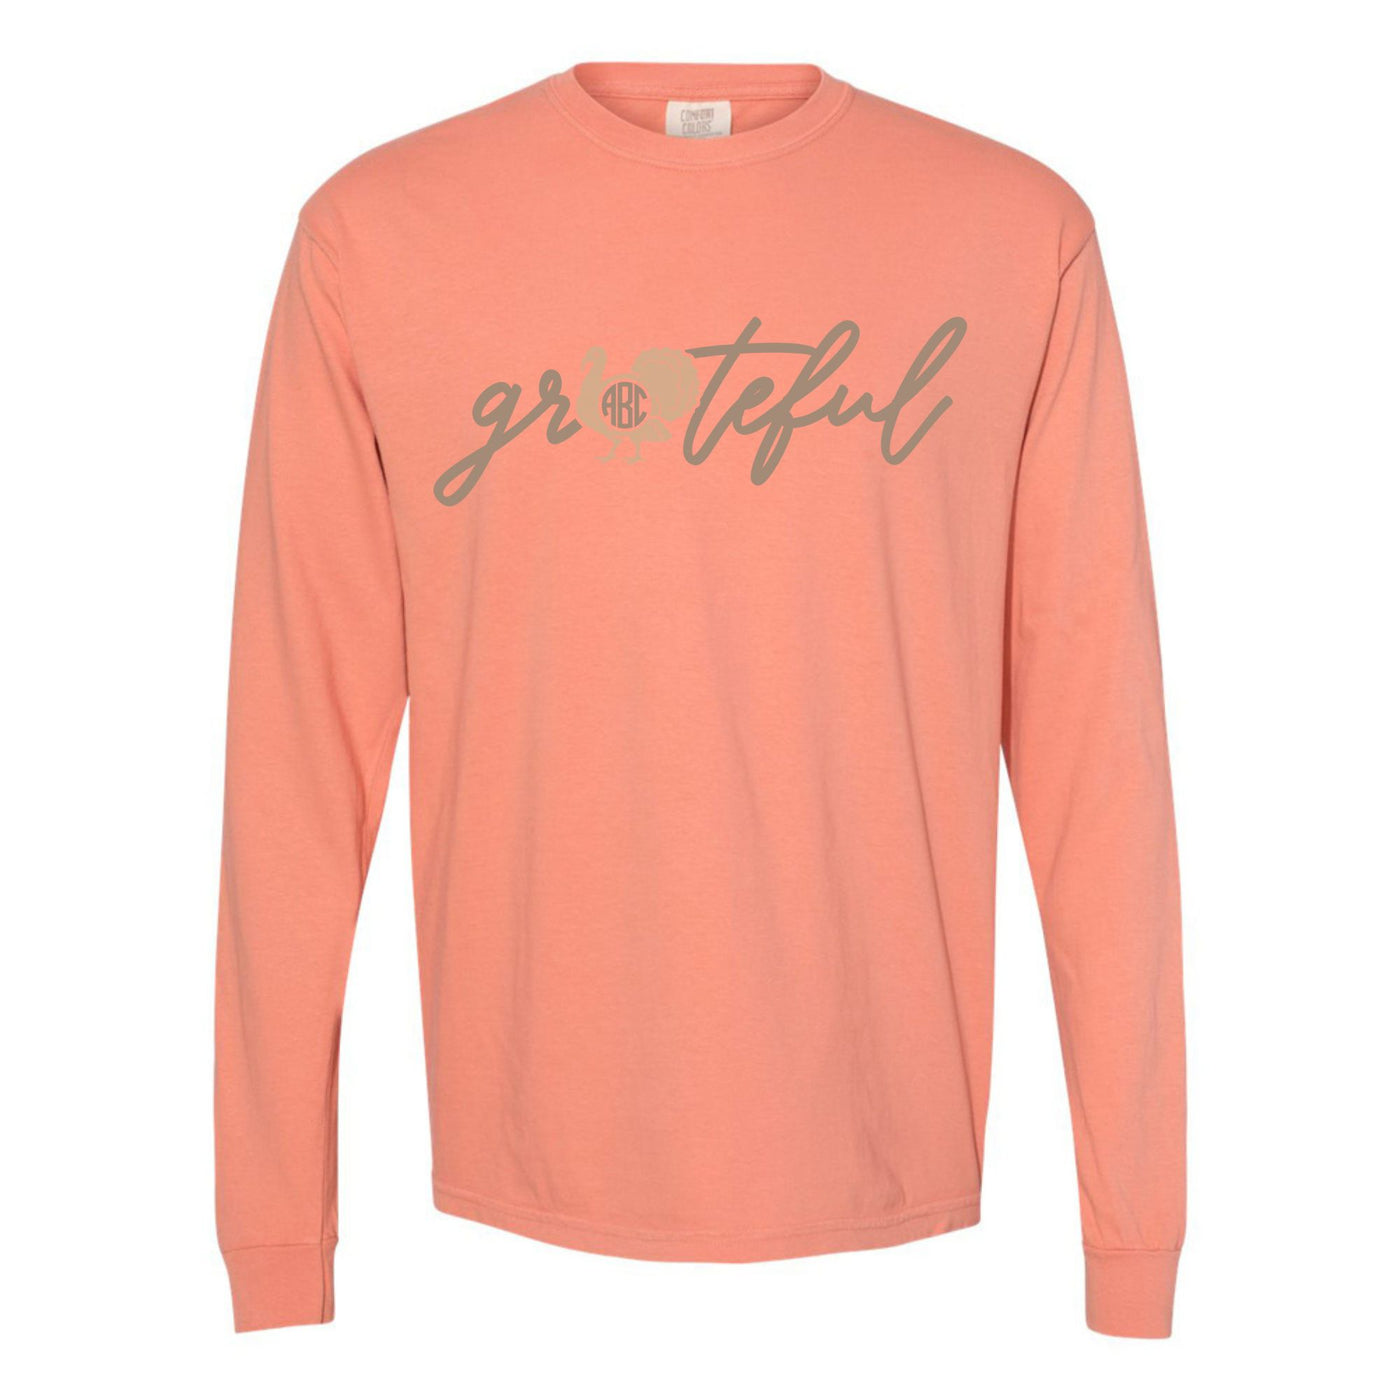 Monogrammed 'Grateful' Long Sleeve T-Shirt